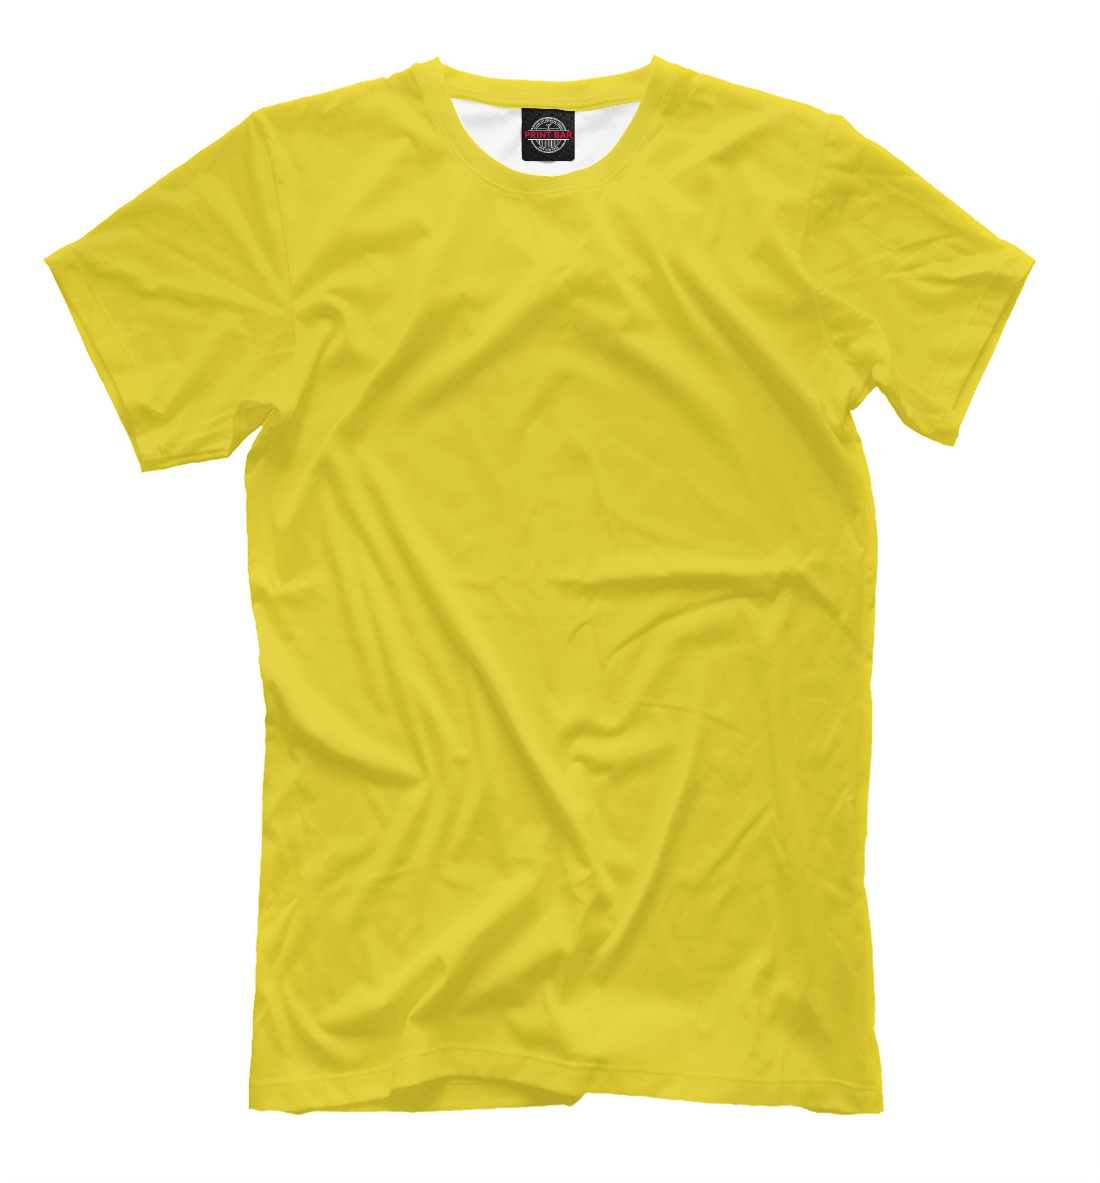 Футболка Цвет Рапсово-желтый для мужчин, артикул: CLR-692519-fut-2mp